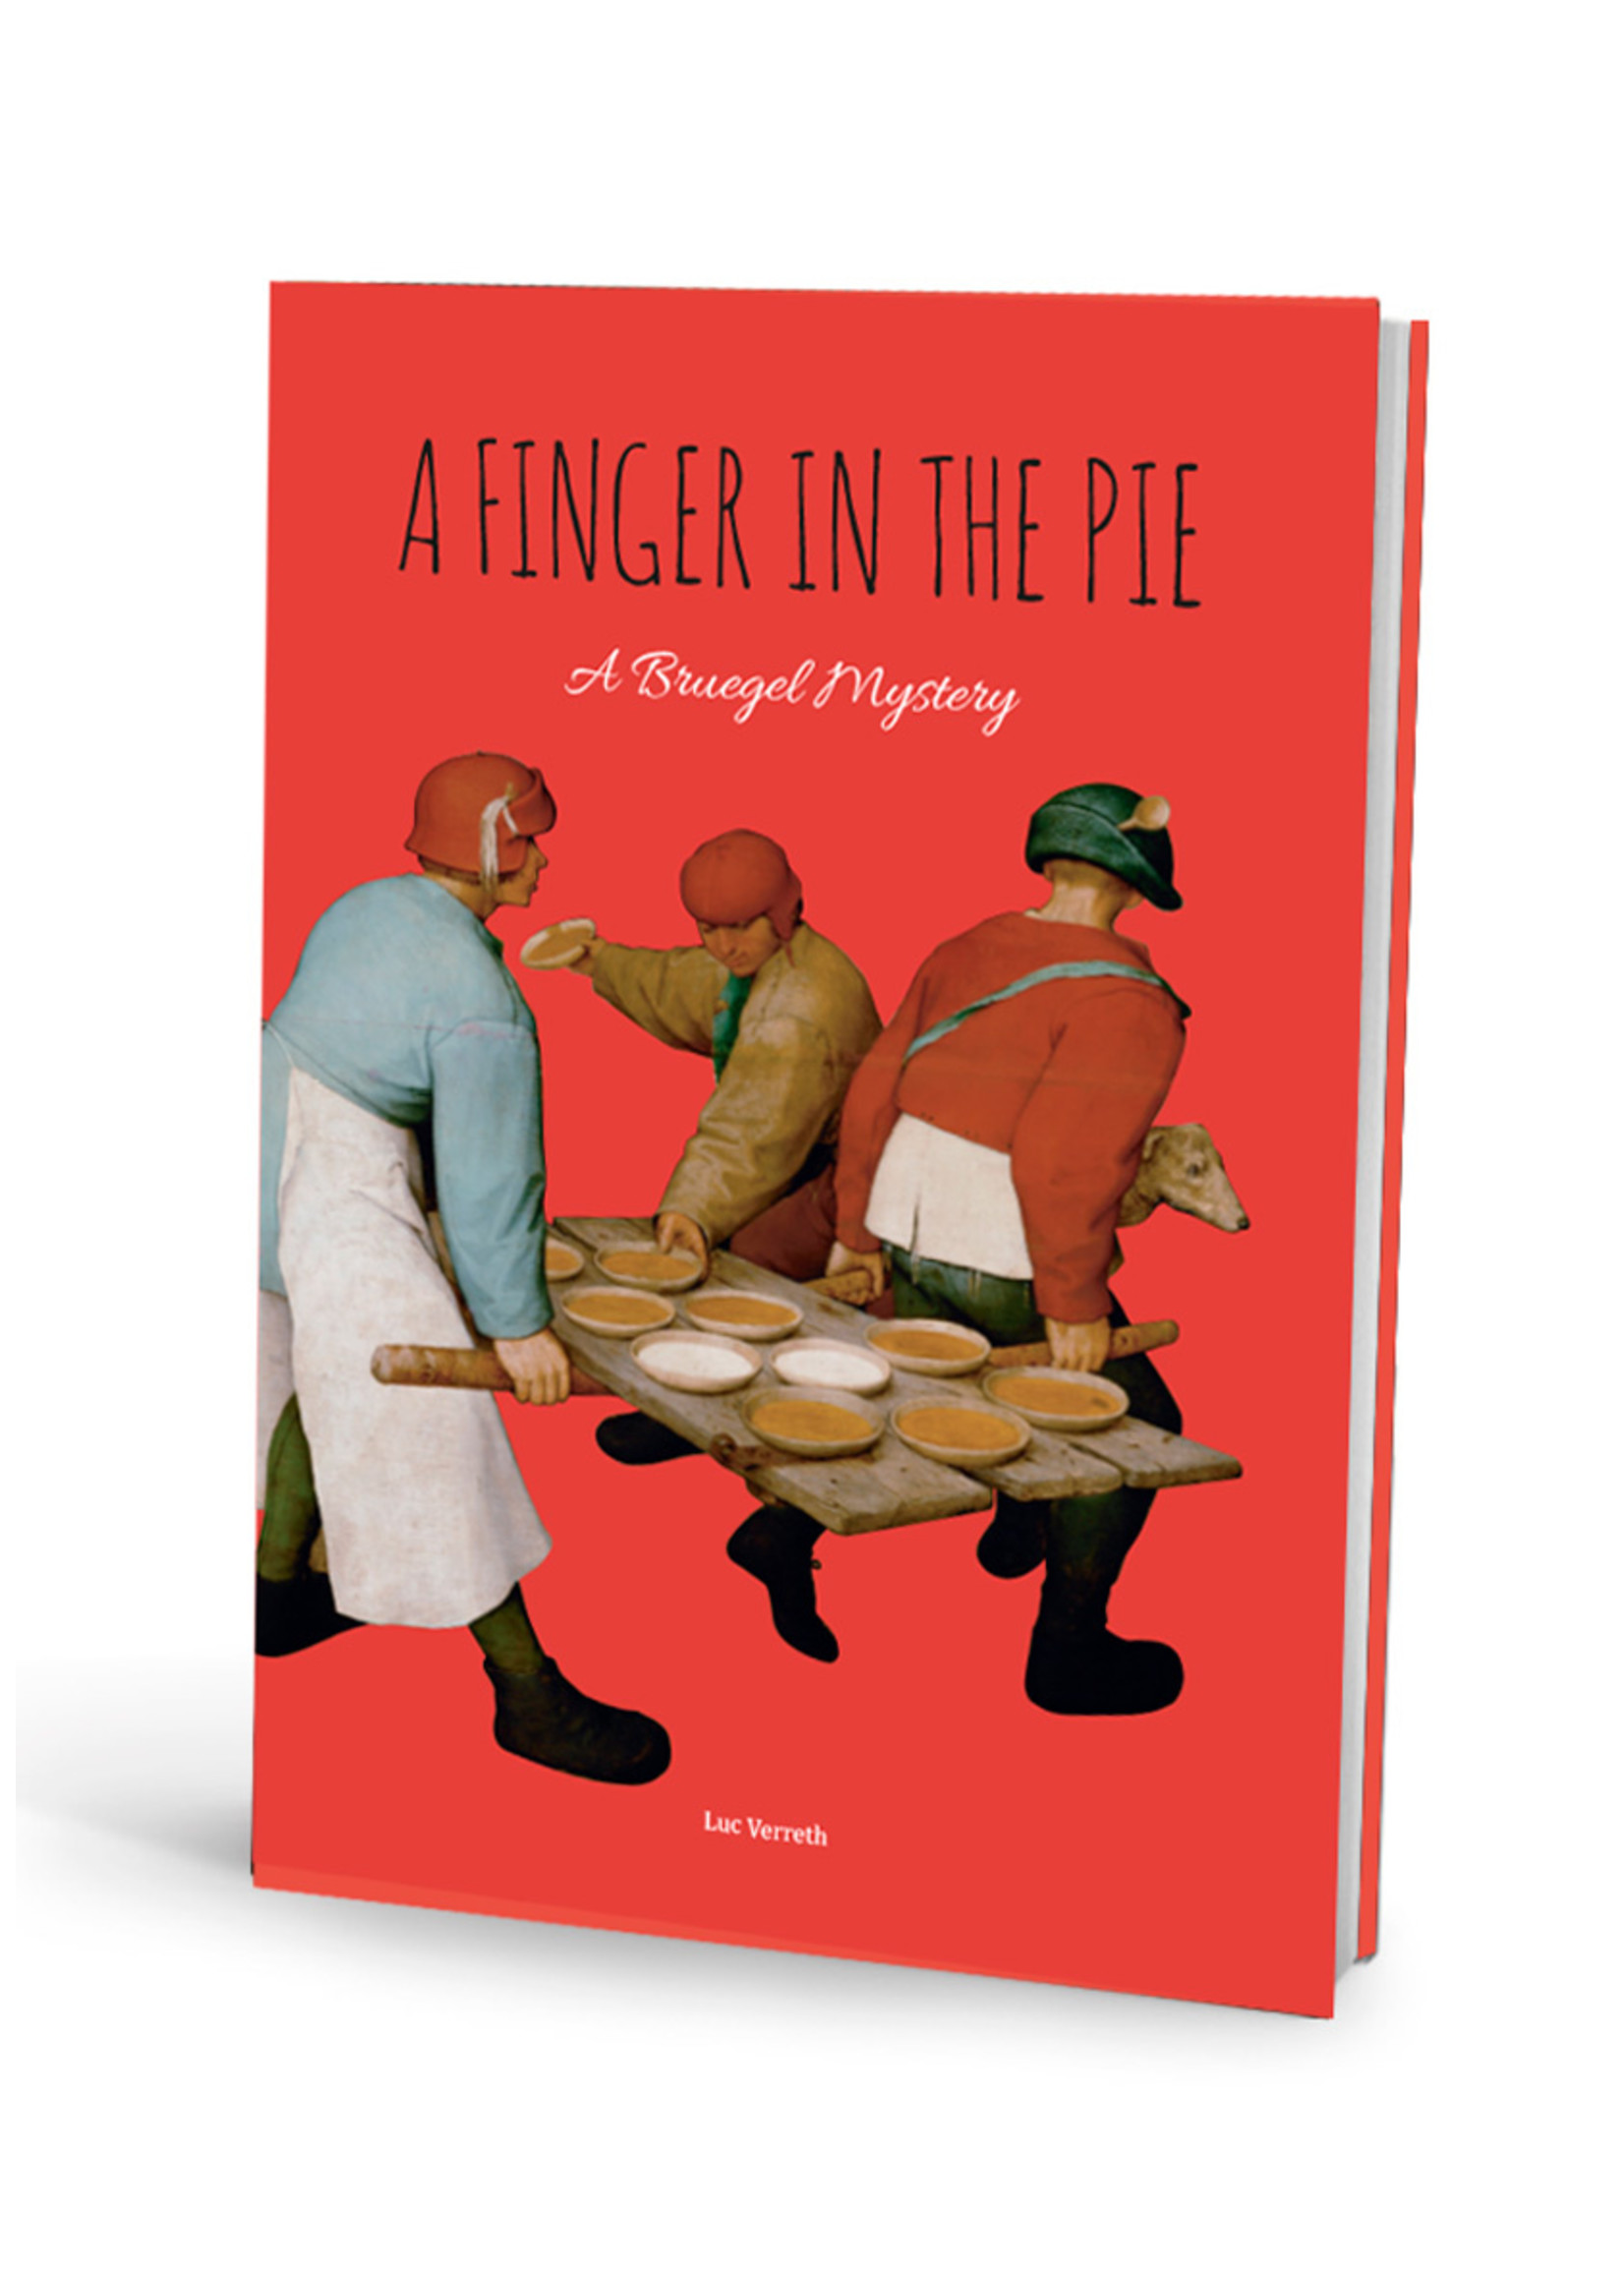 A finger in the pie - A Breugel Mystery